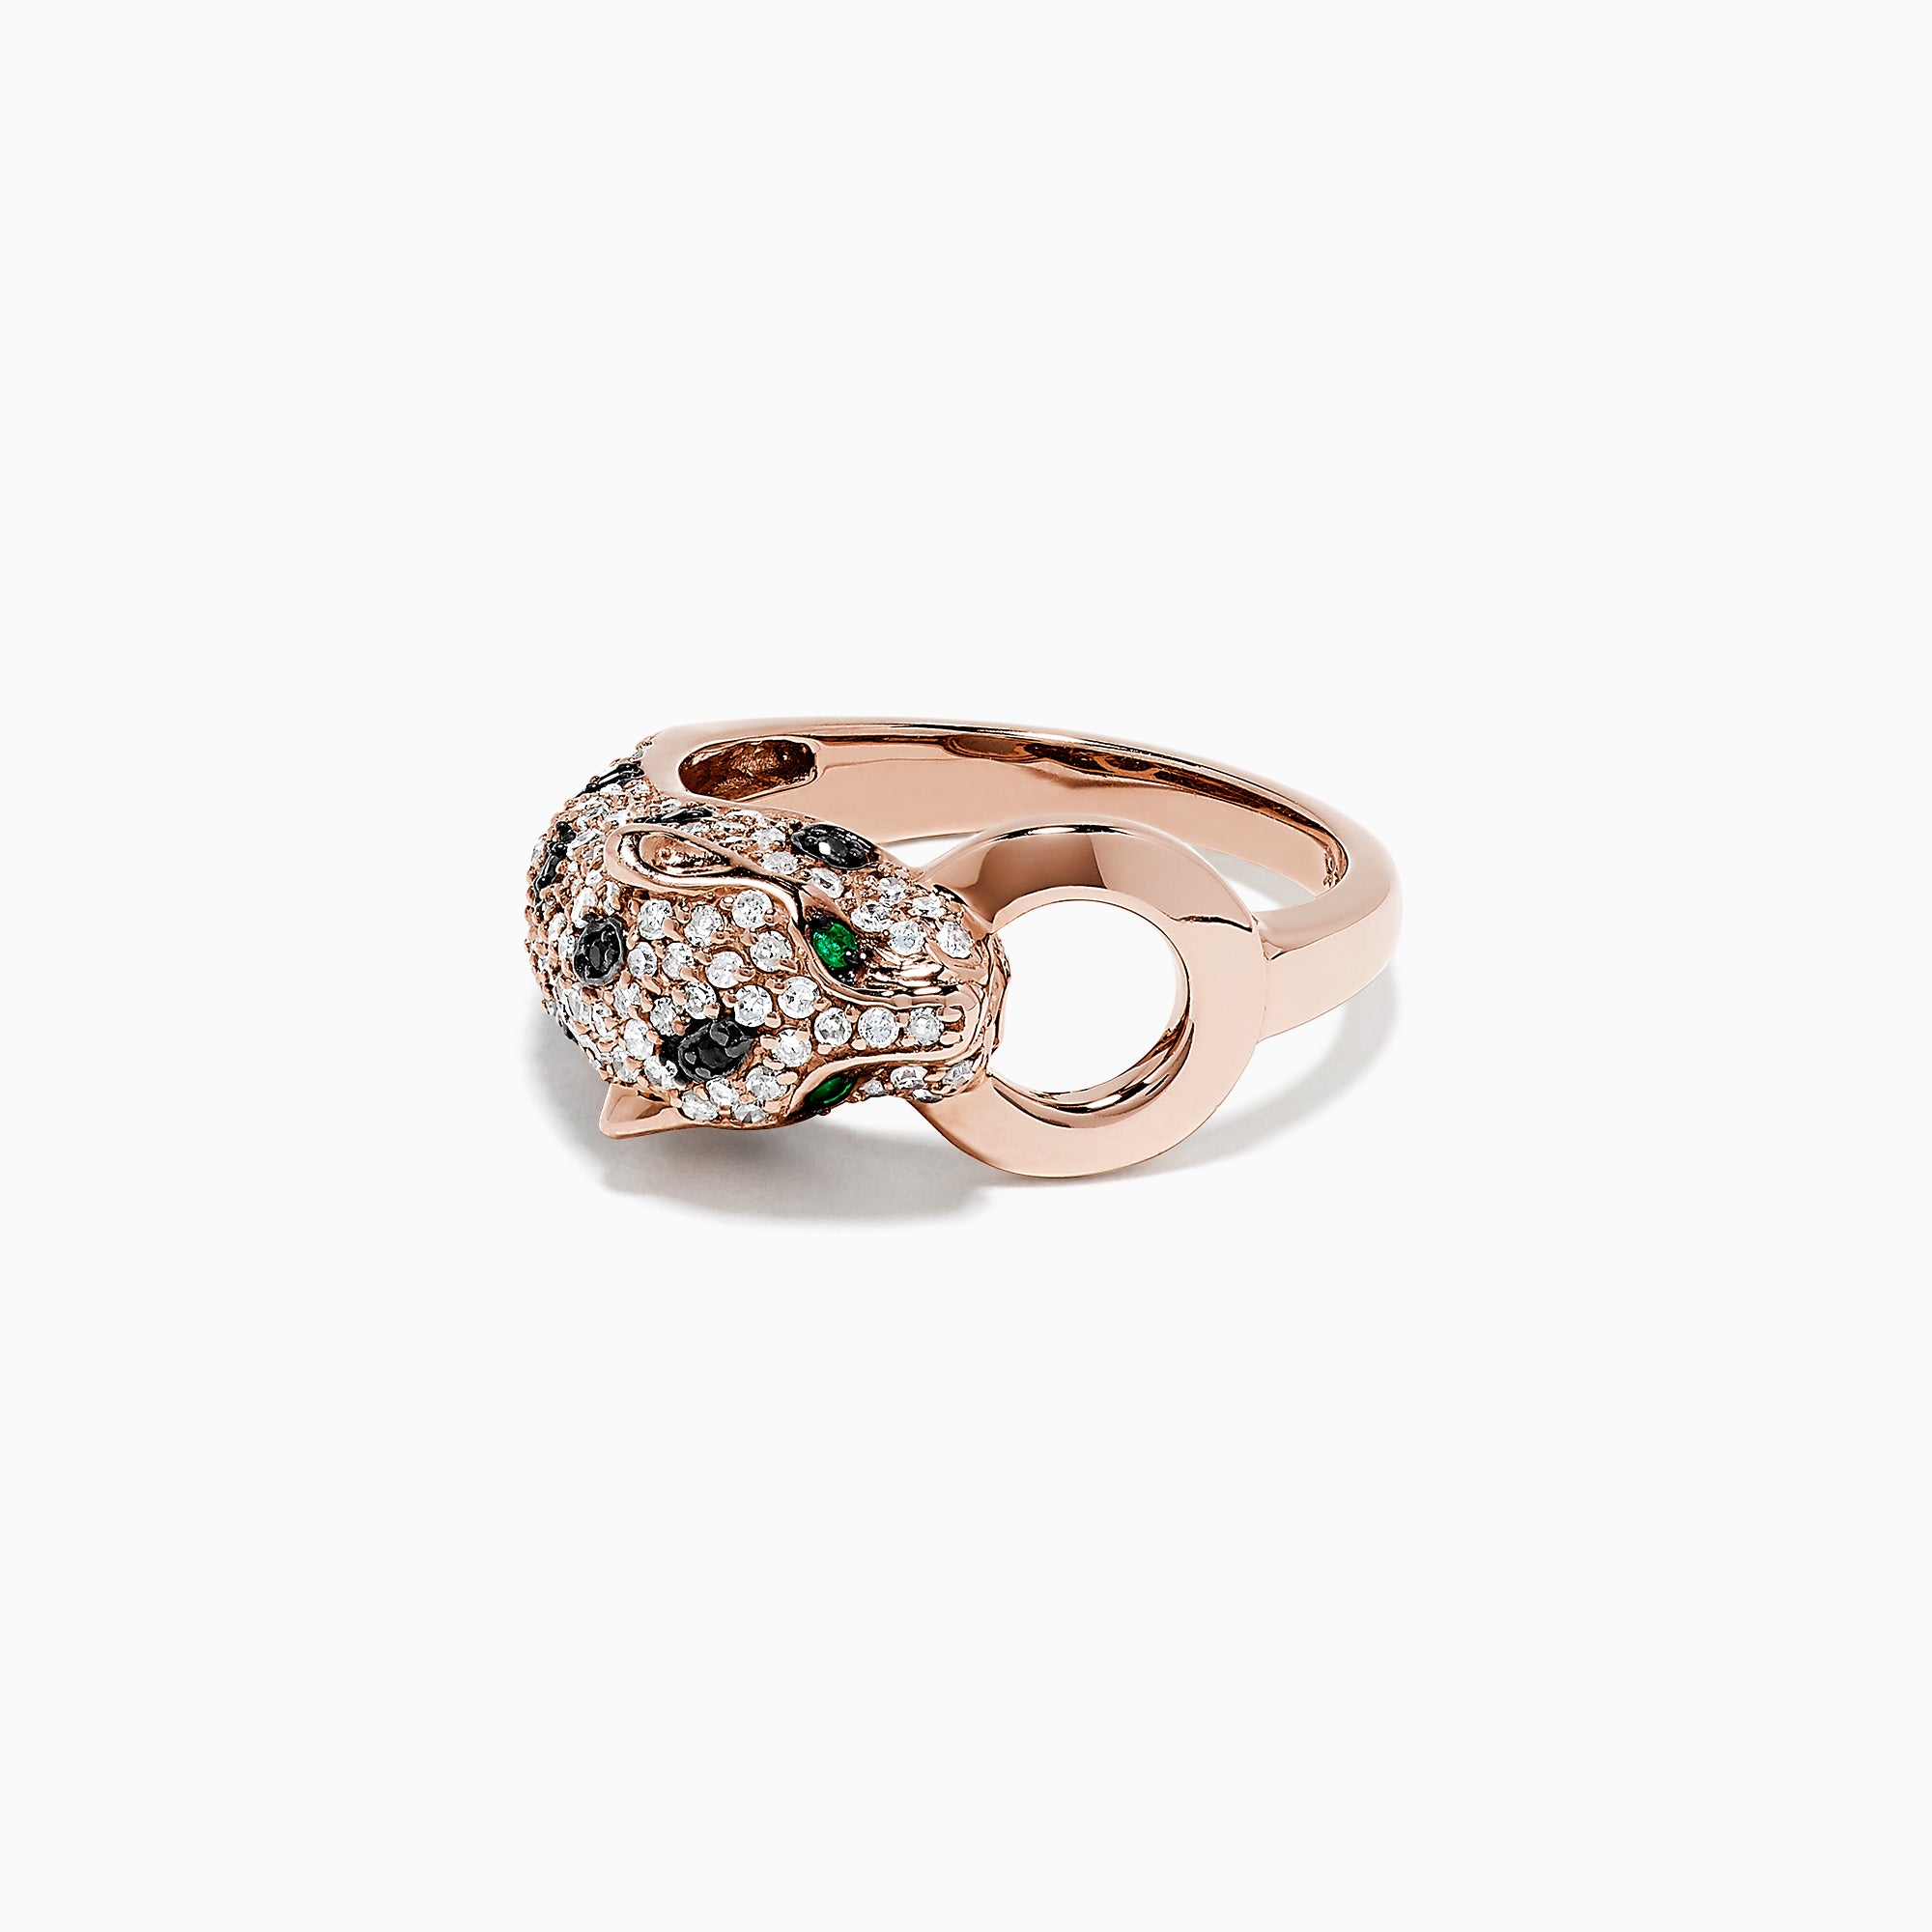 Effy Signature 14K Rose Gold Diamond and Emerald Ring, 0.66 TCW